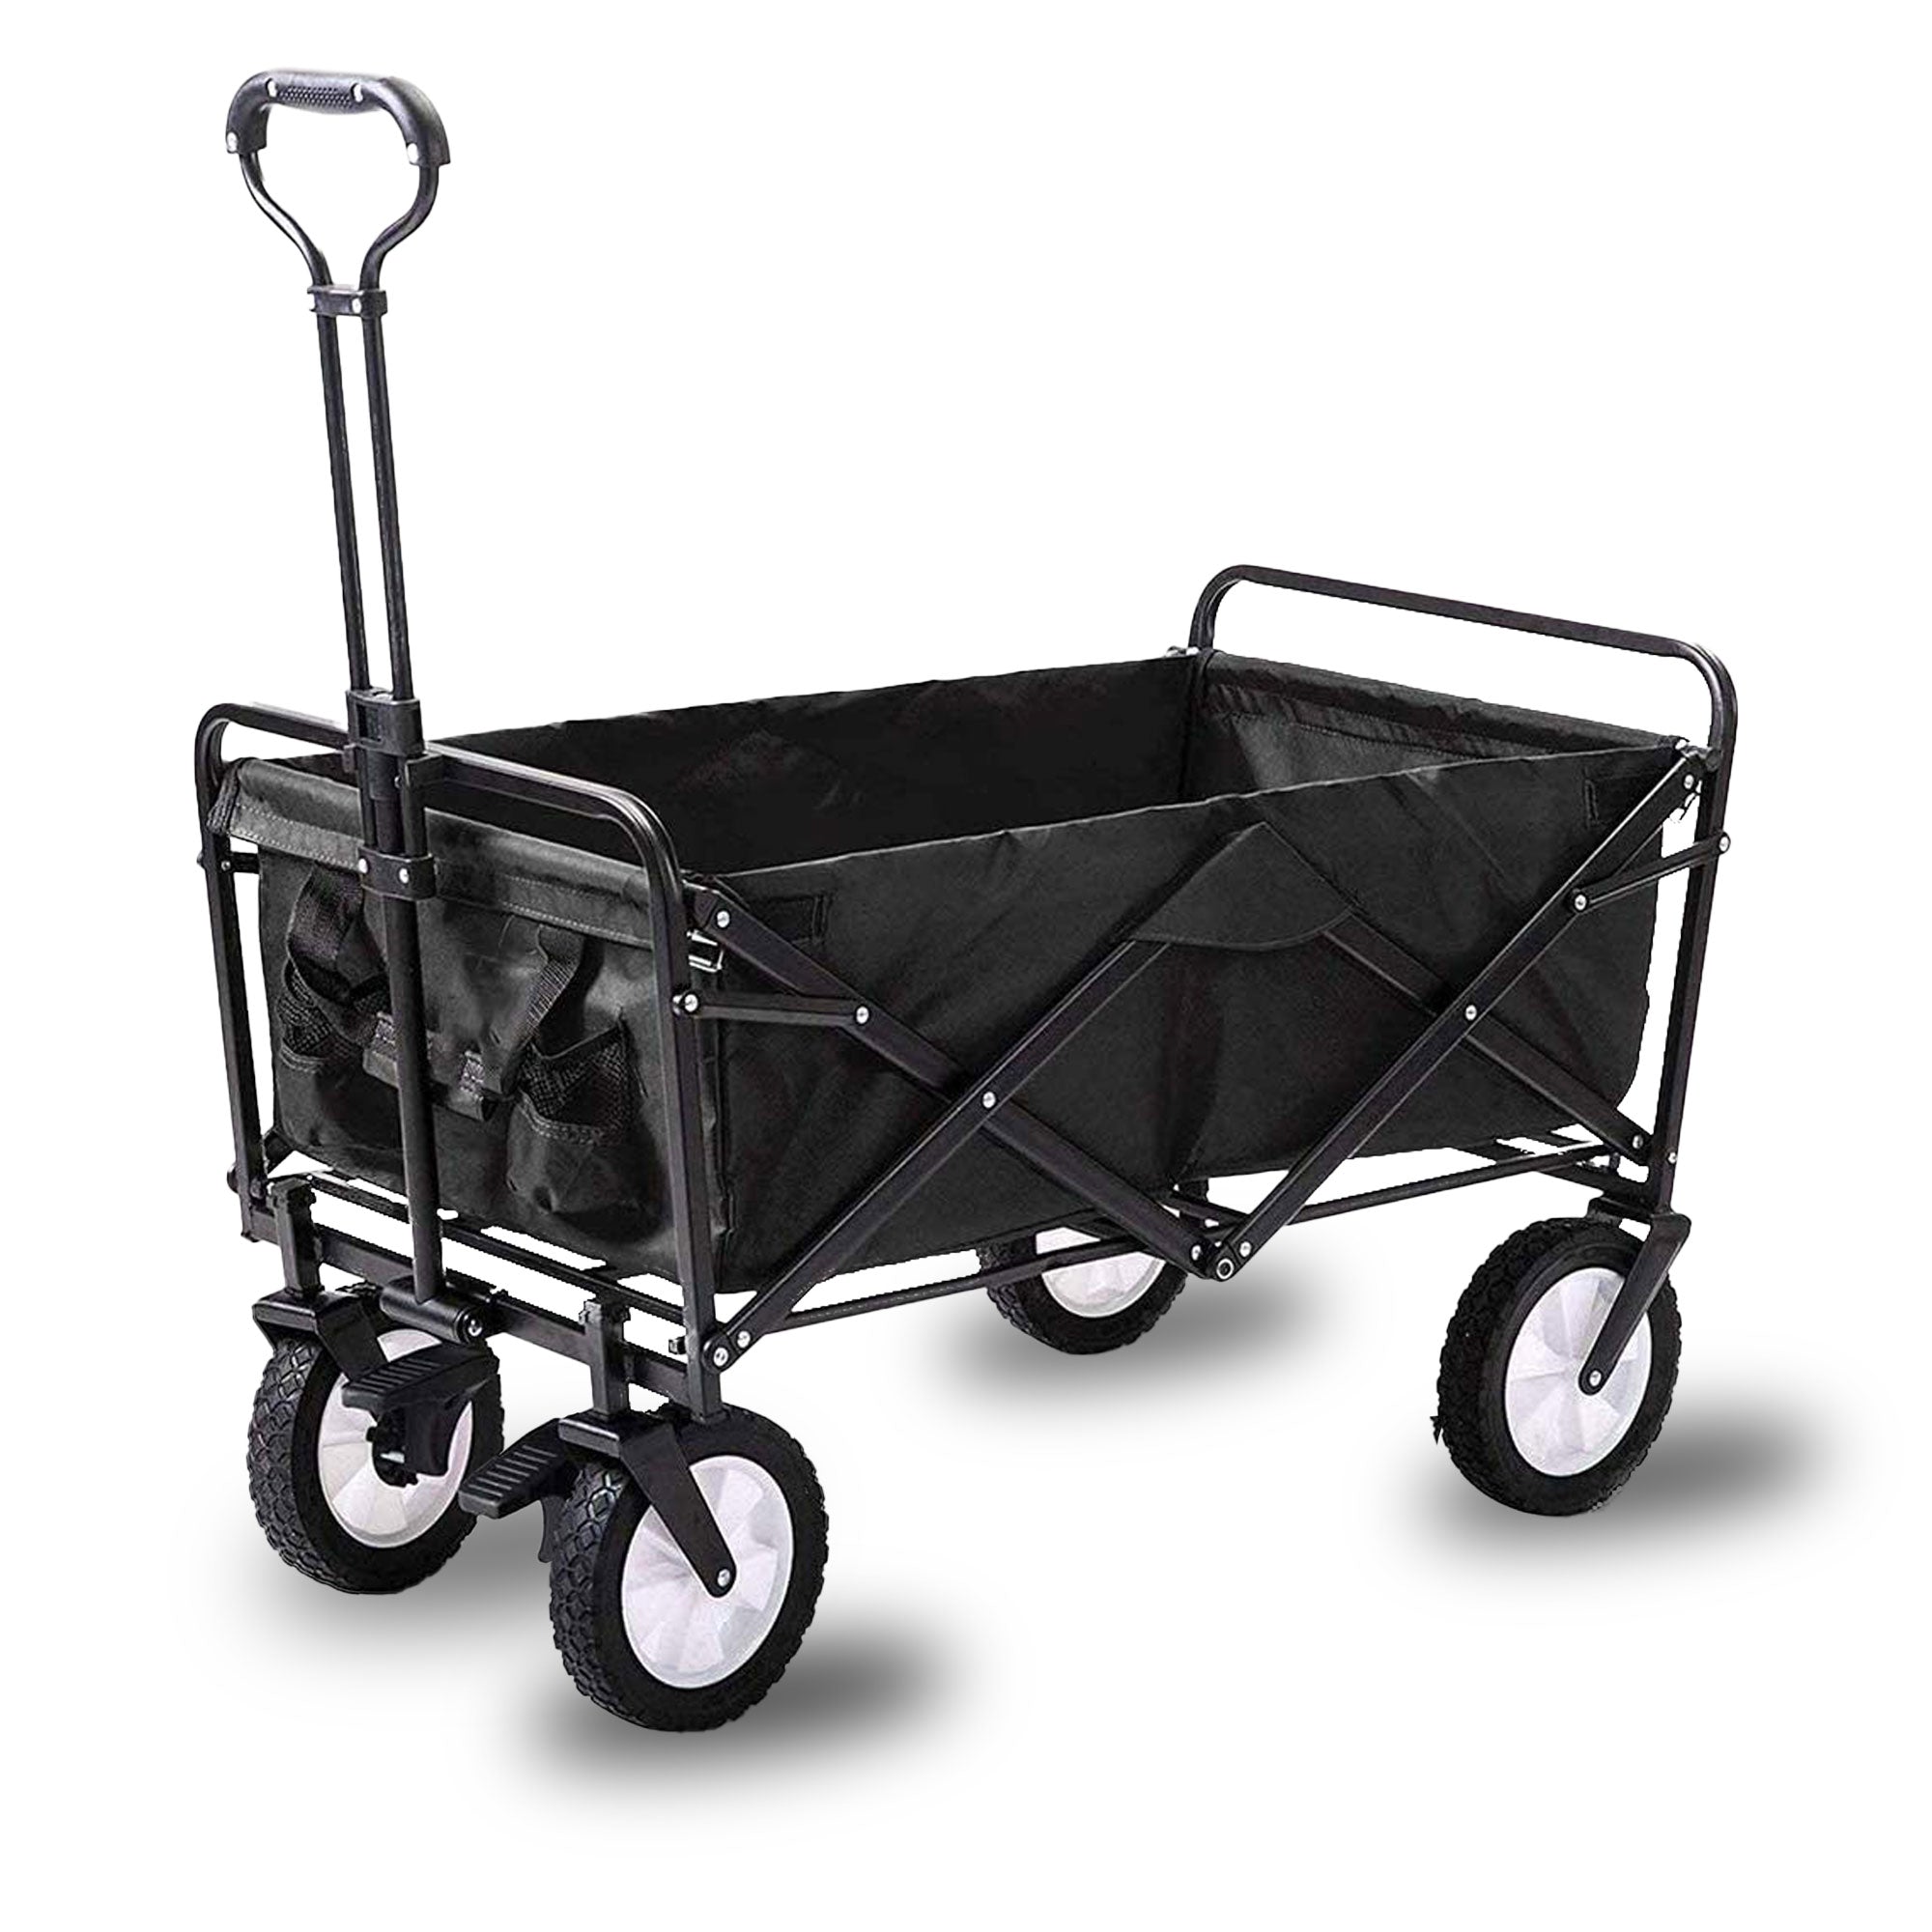 Foldable Collapsible Wagon Cart Garden Beach Outdoor Shopping Trolley Camping Brake - Black